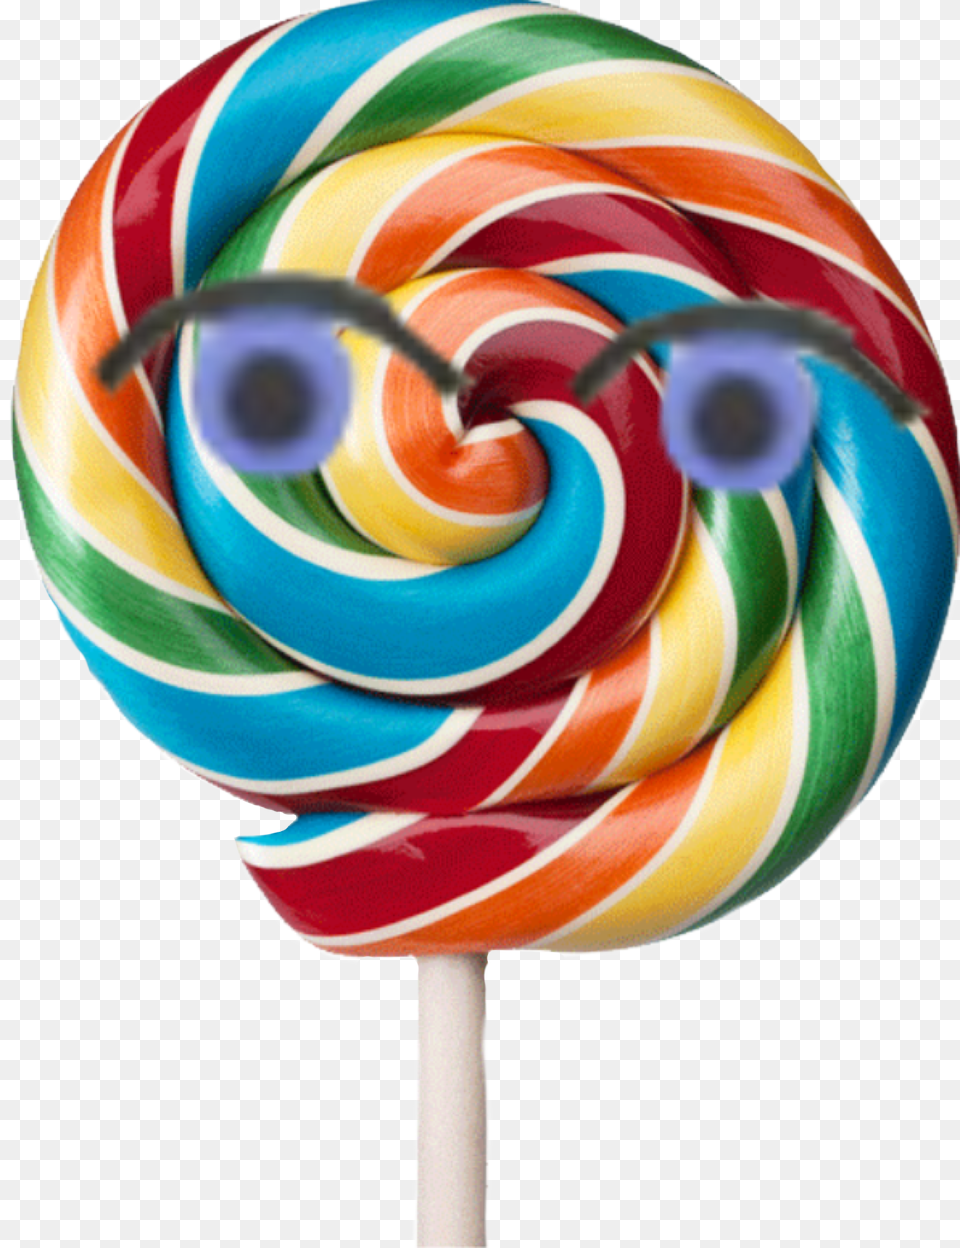 Lollipop Lollipop, Candy, Food, Sweets, Ball Png